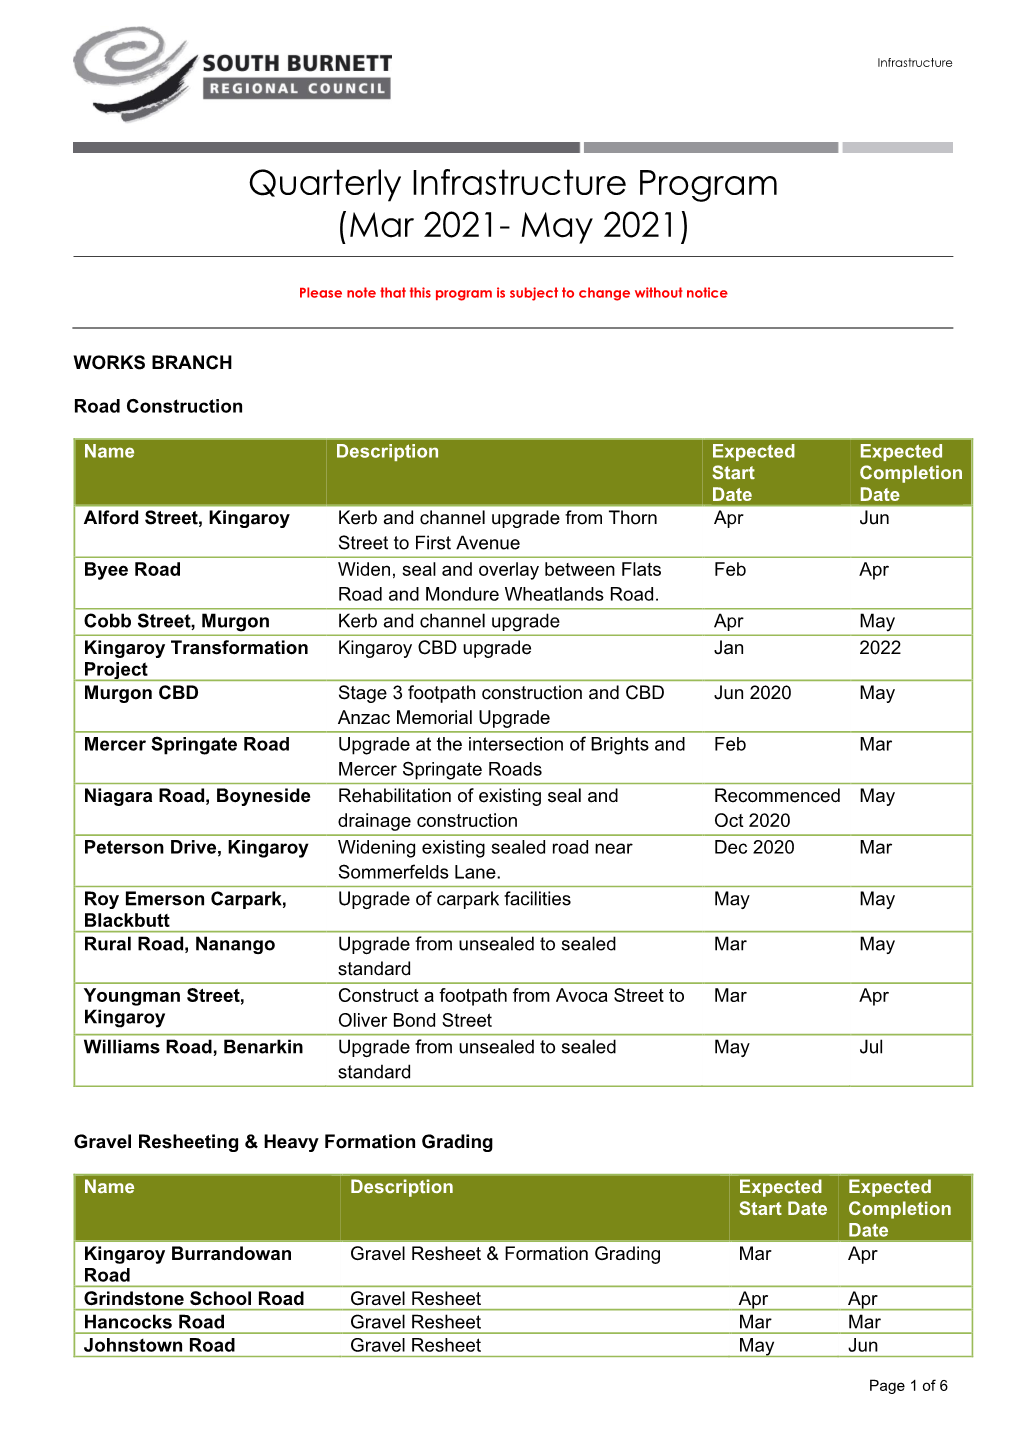 Quarterly Infrastructure Program (Mar 2021- May 2021)